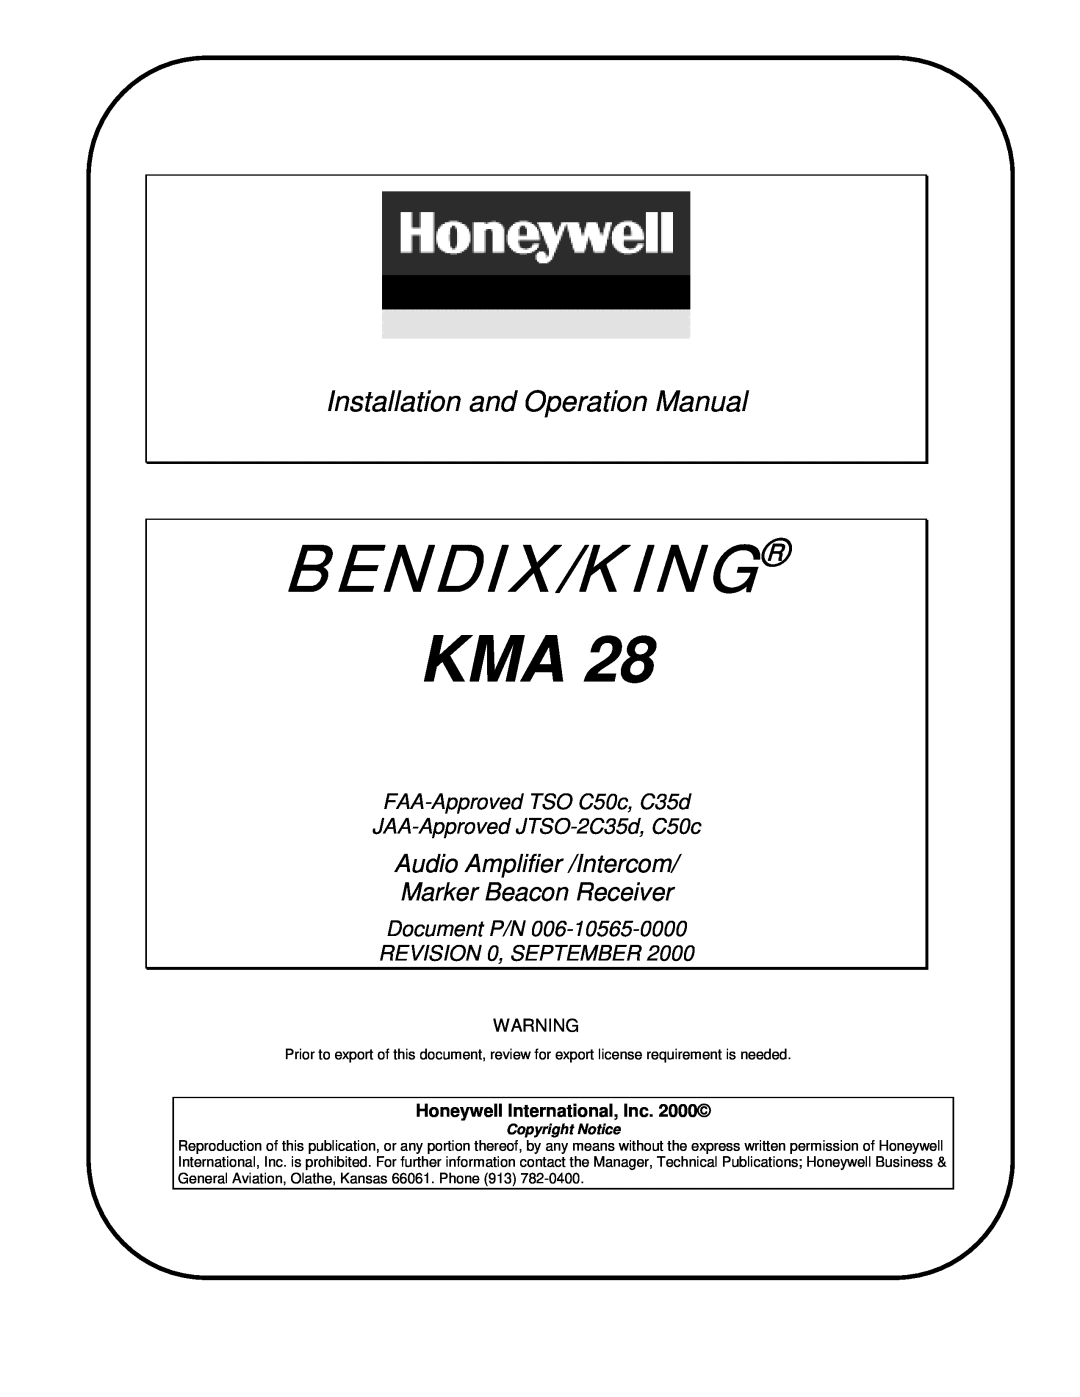 Honeywell KMA28 operation manual Bendix/King Kma, Audio Amplifier /Intercom Marker Beacon Receiver, Copyright Notice 